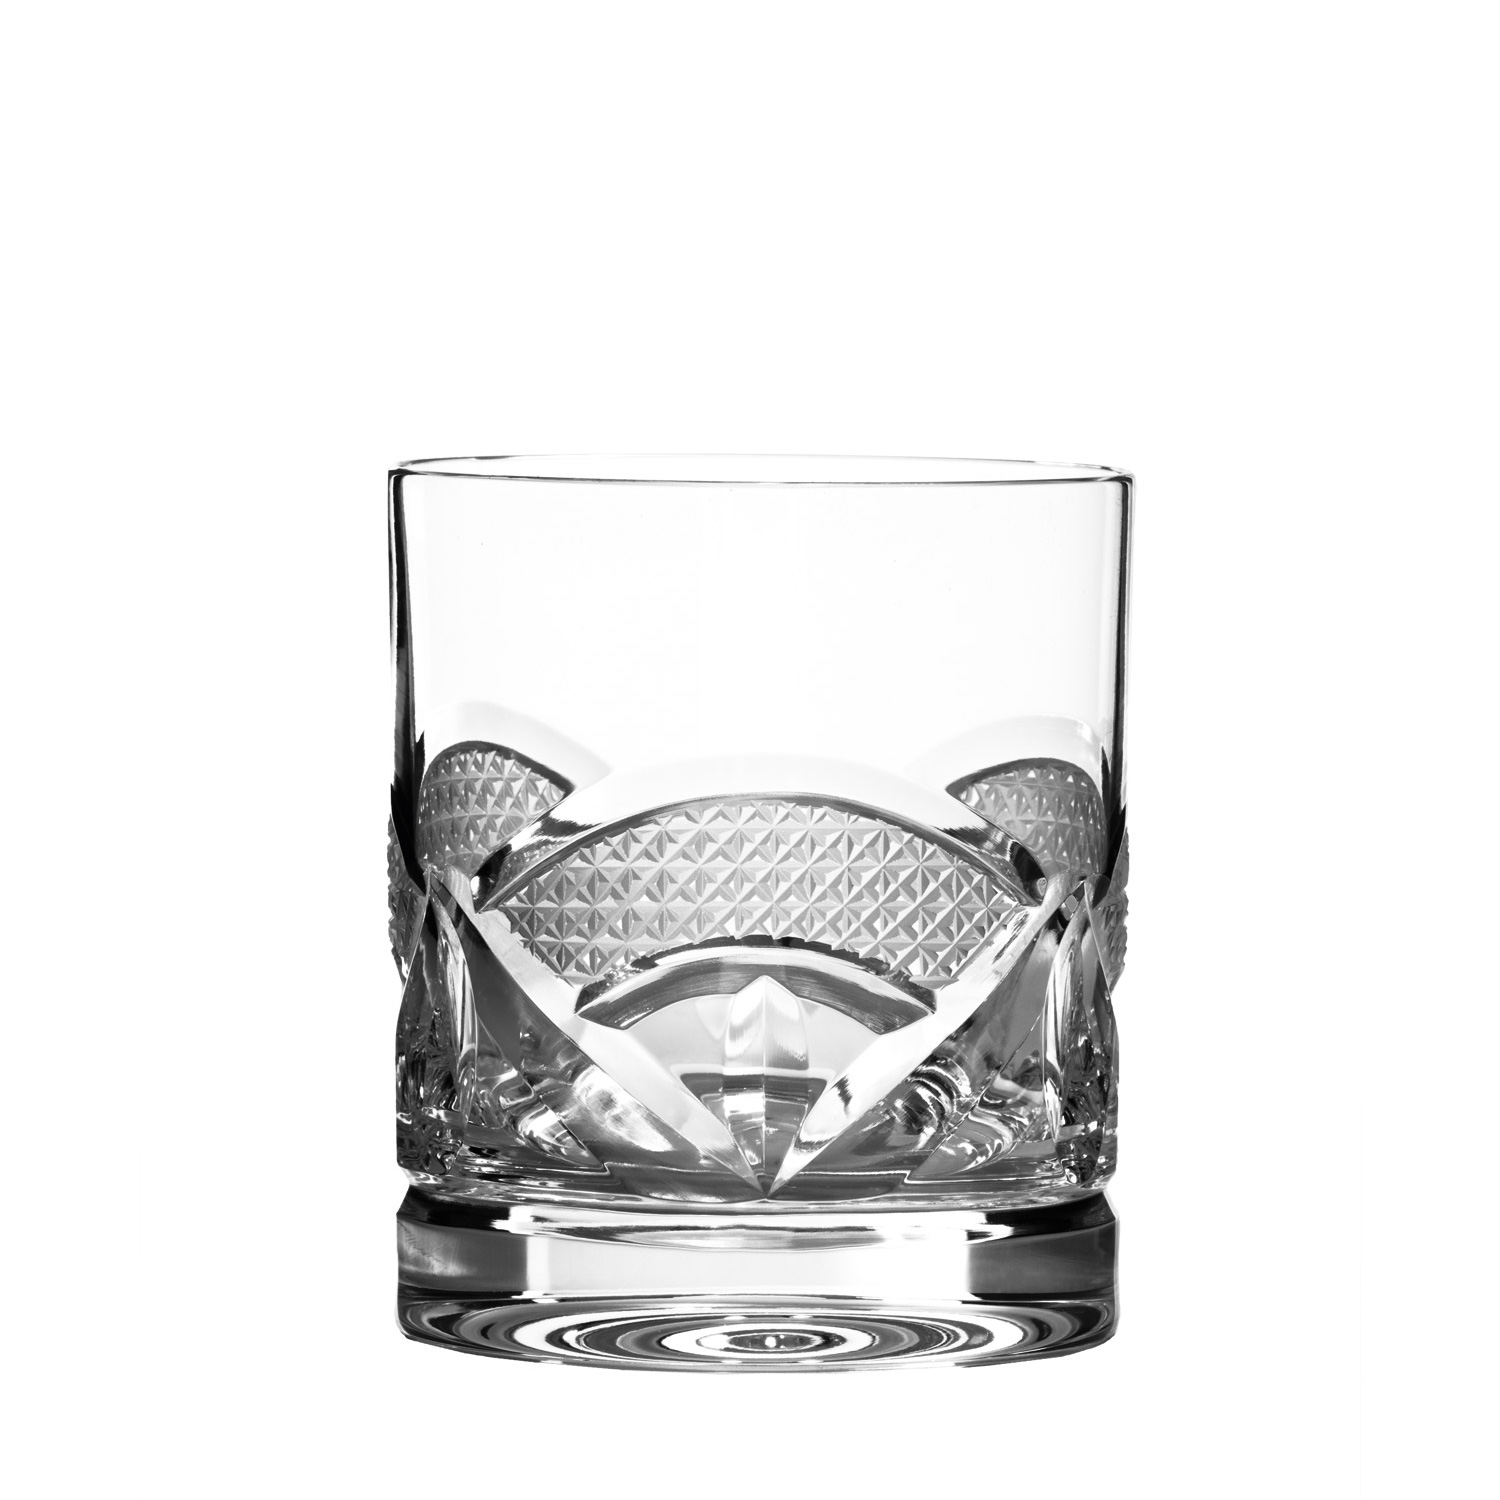 Whiskyglas Kristall Mon Plaisir clear (9 cm) "Der Klassiker"